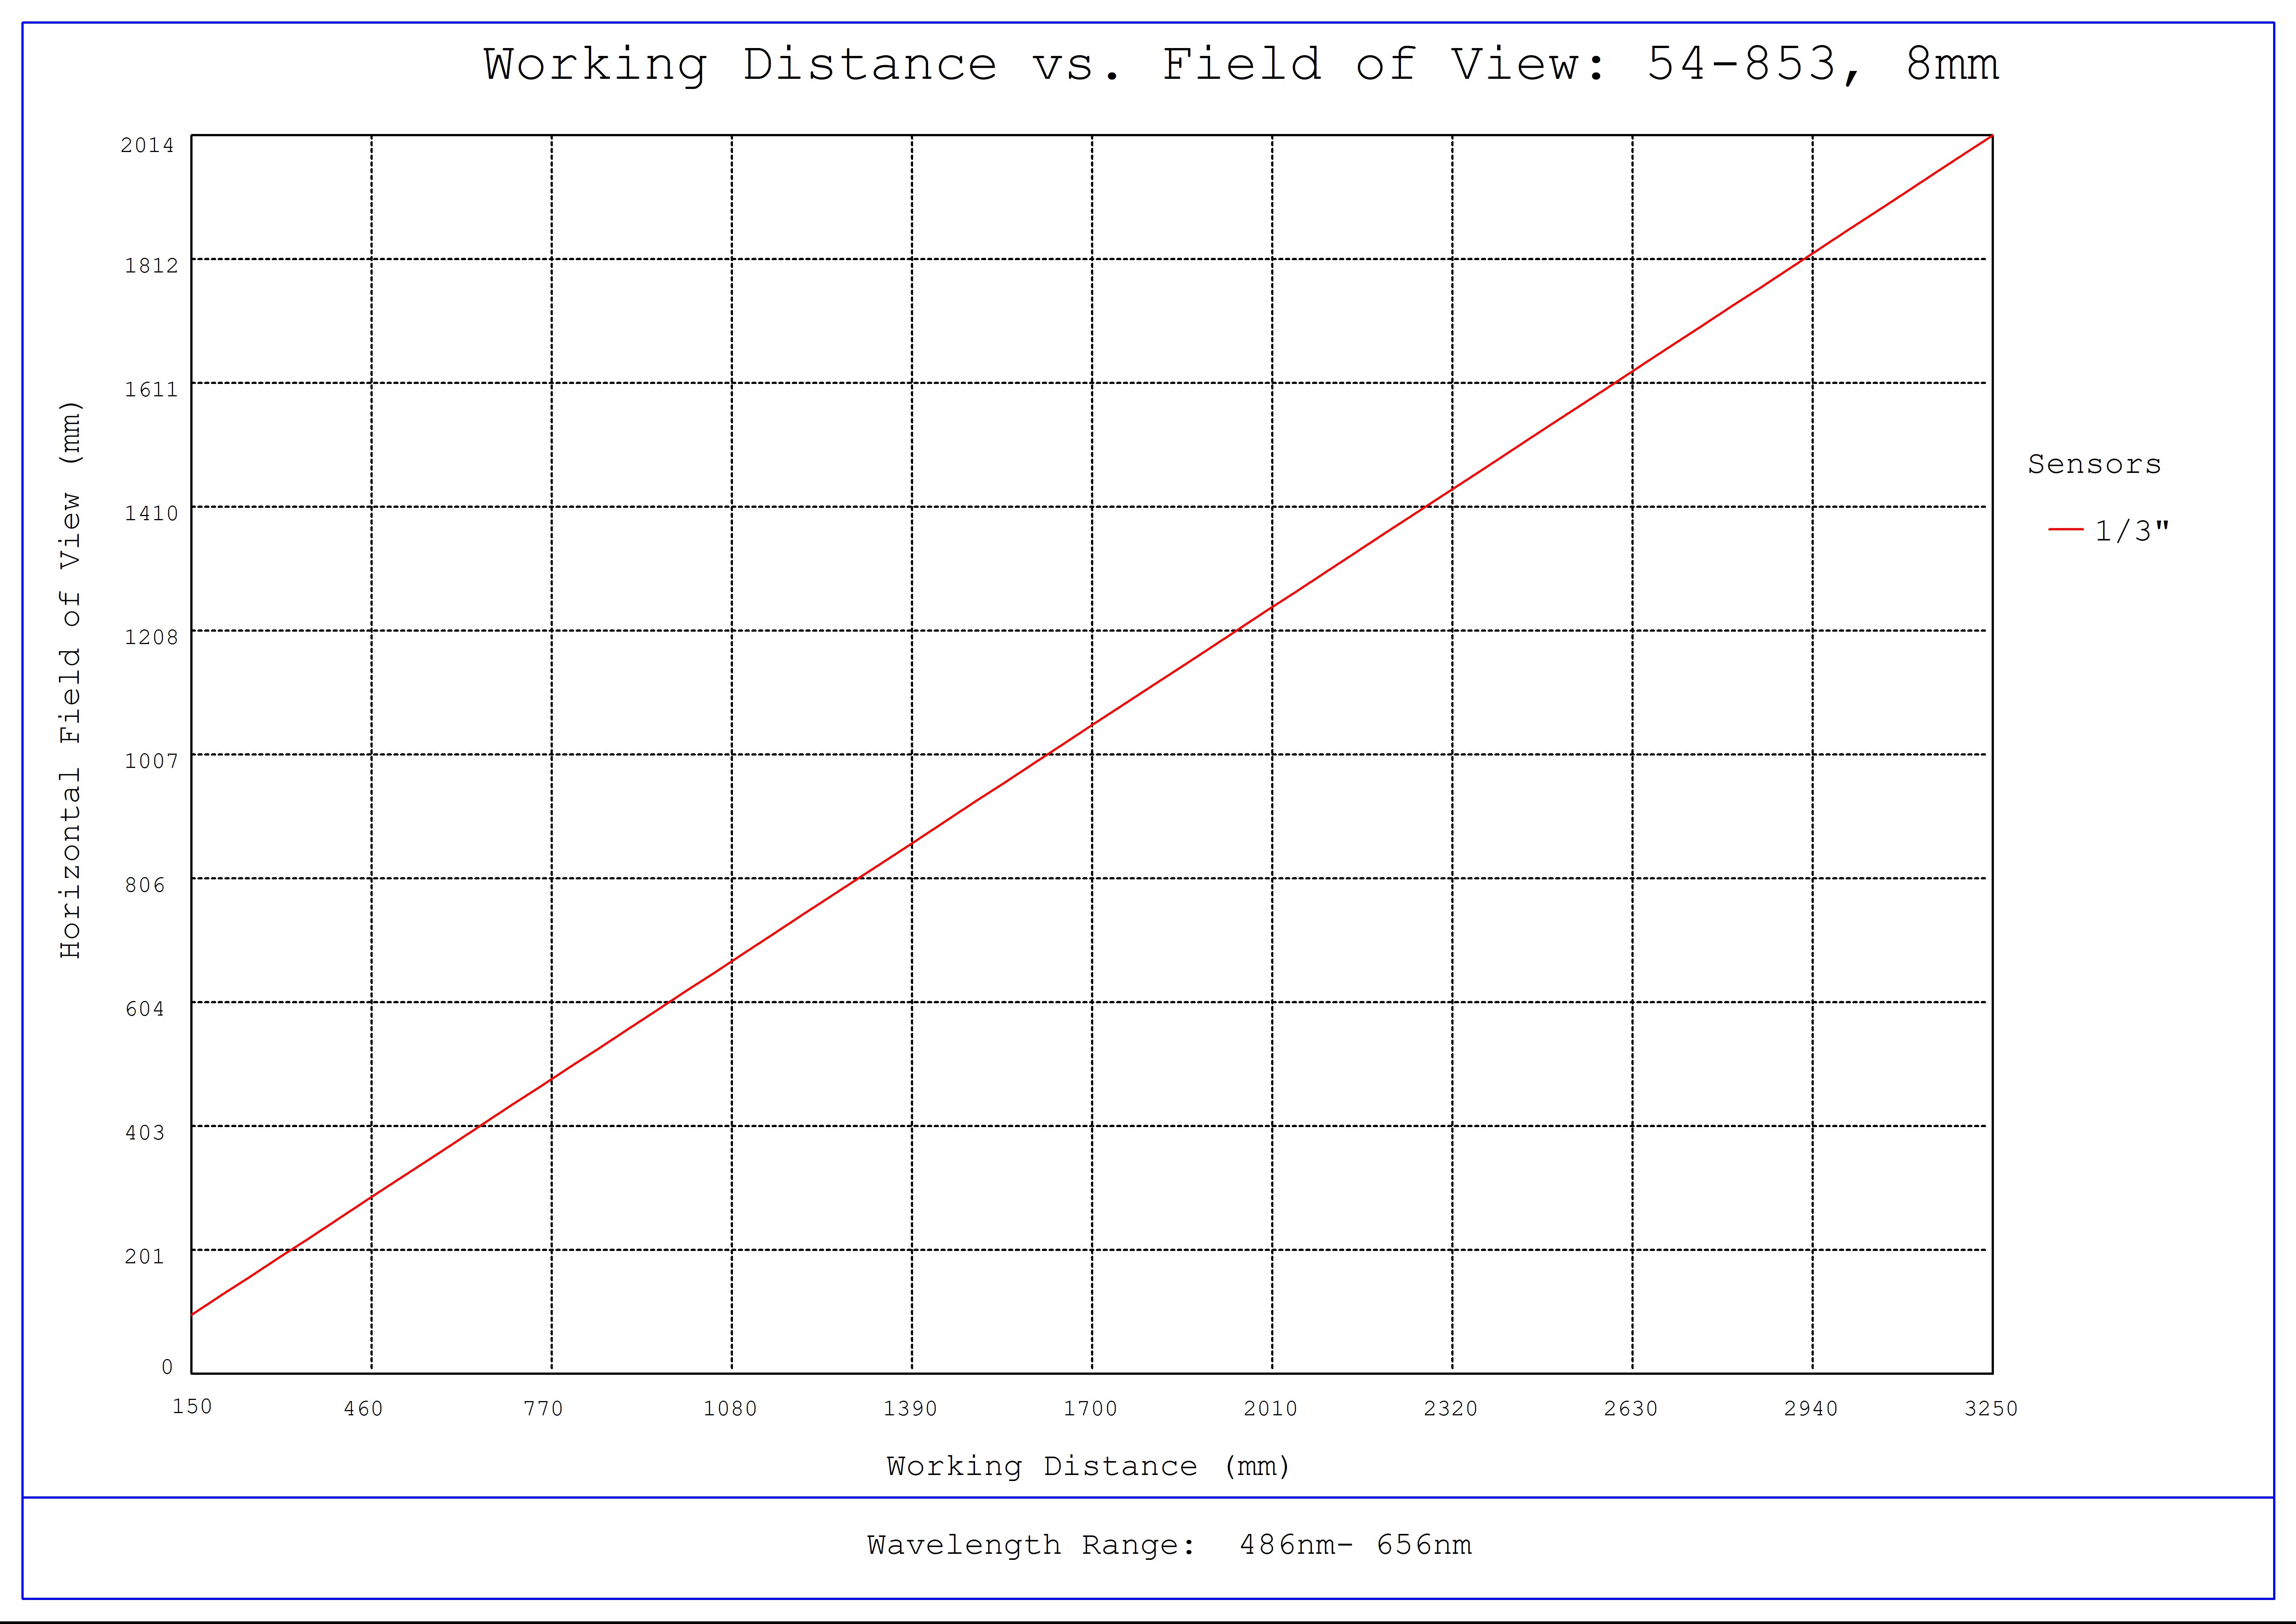 #54-853, f/1.9, 8mm Focal Length Green Series M12 Lens, Working Distance versus Field of View Plot